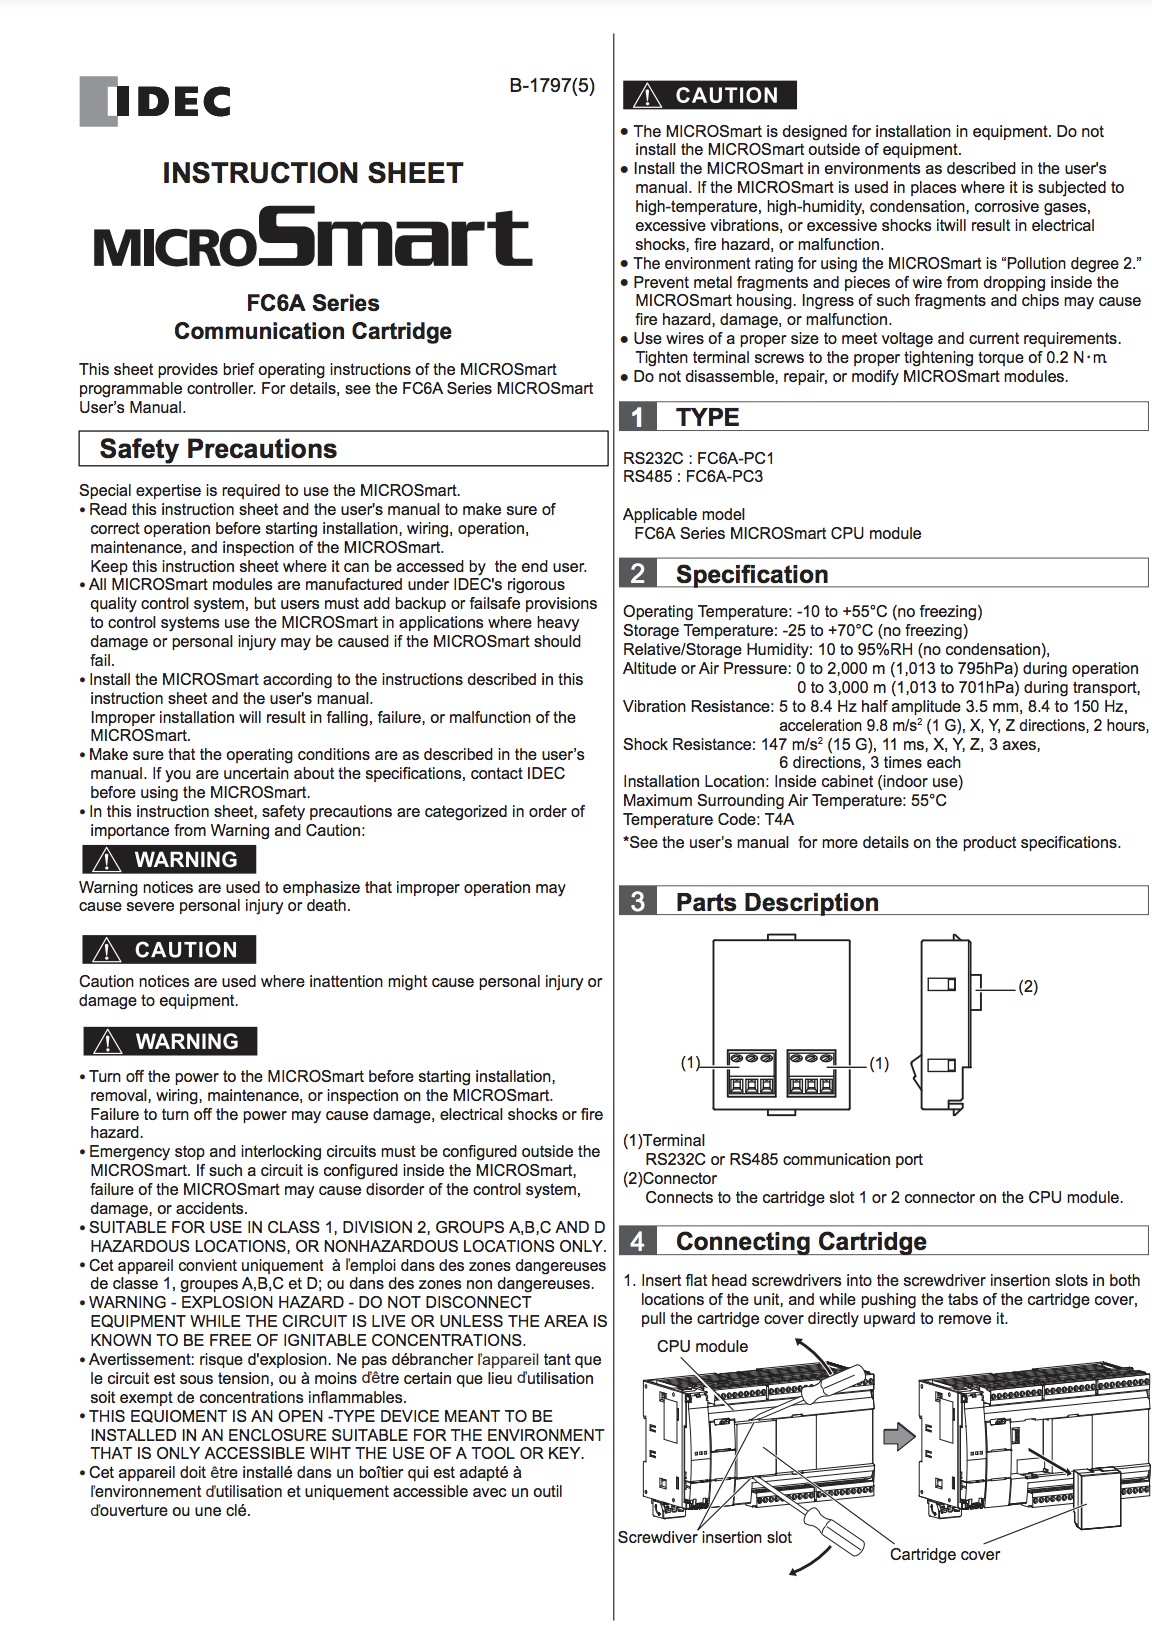 IDEC FC6A MICROSmart Communicaton Cartridge Instruction Sheet